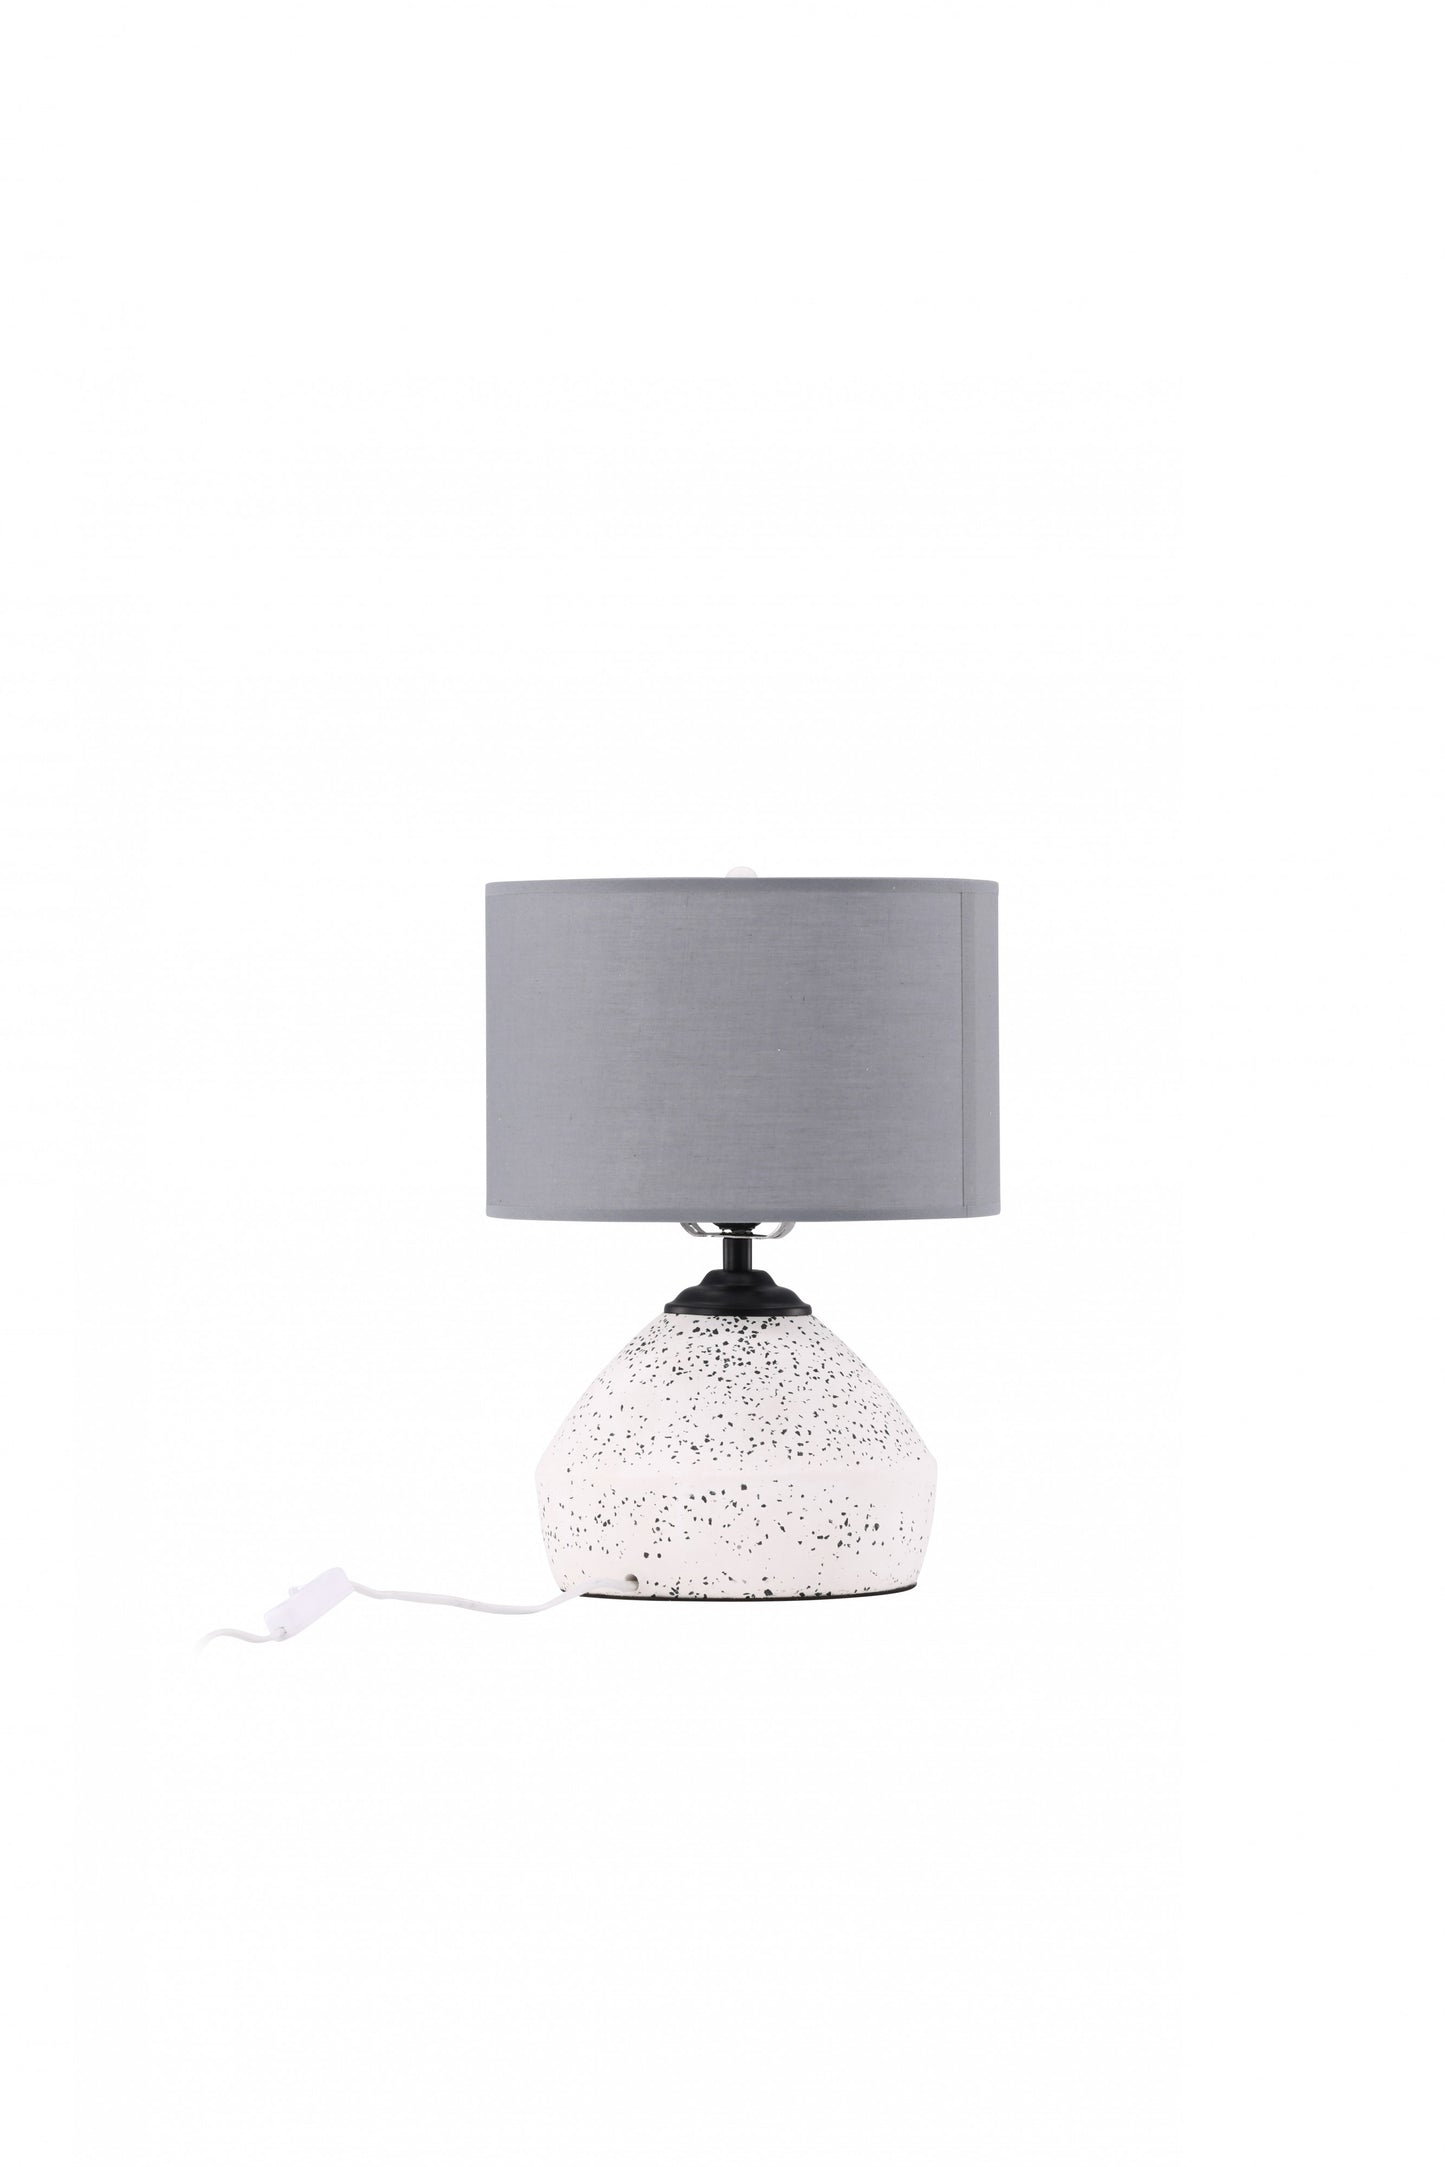 Sisteron Bordlampe, Hvid / Mørk grå stof